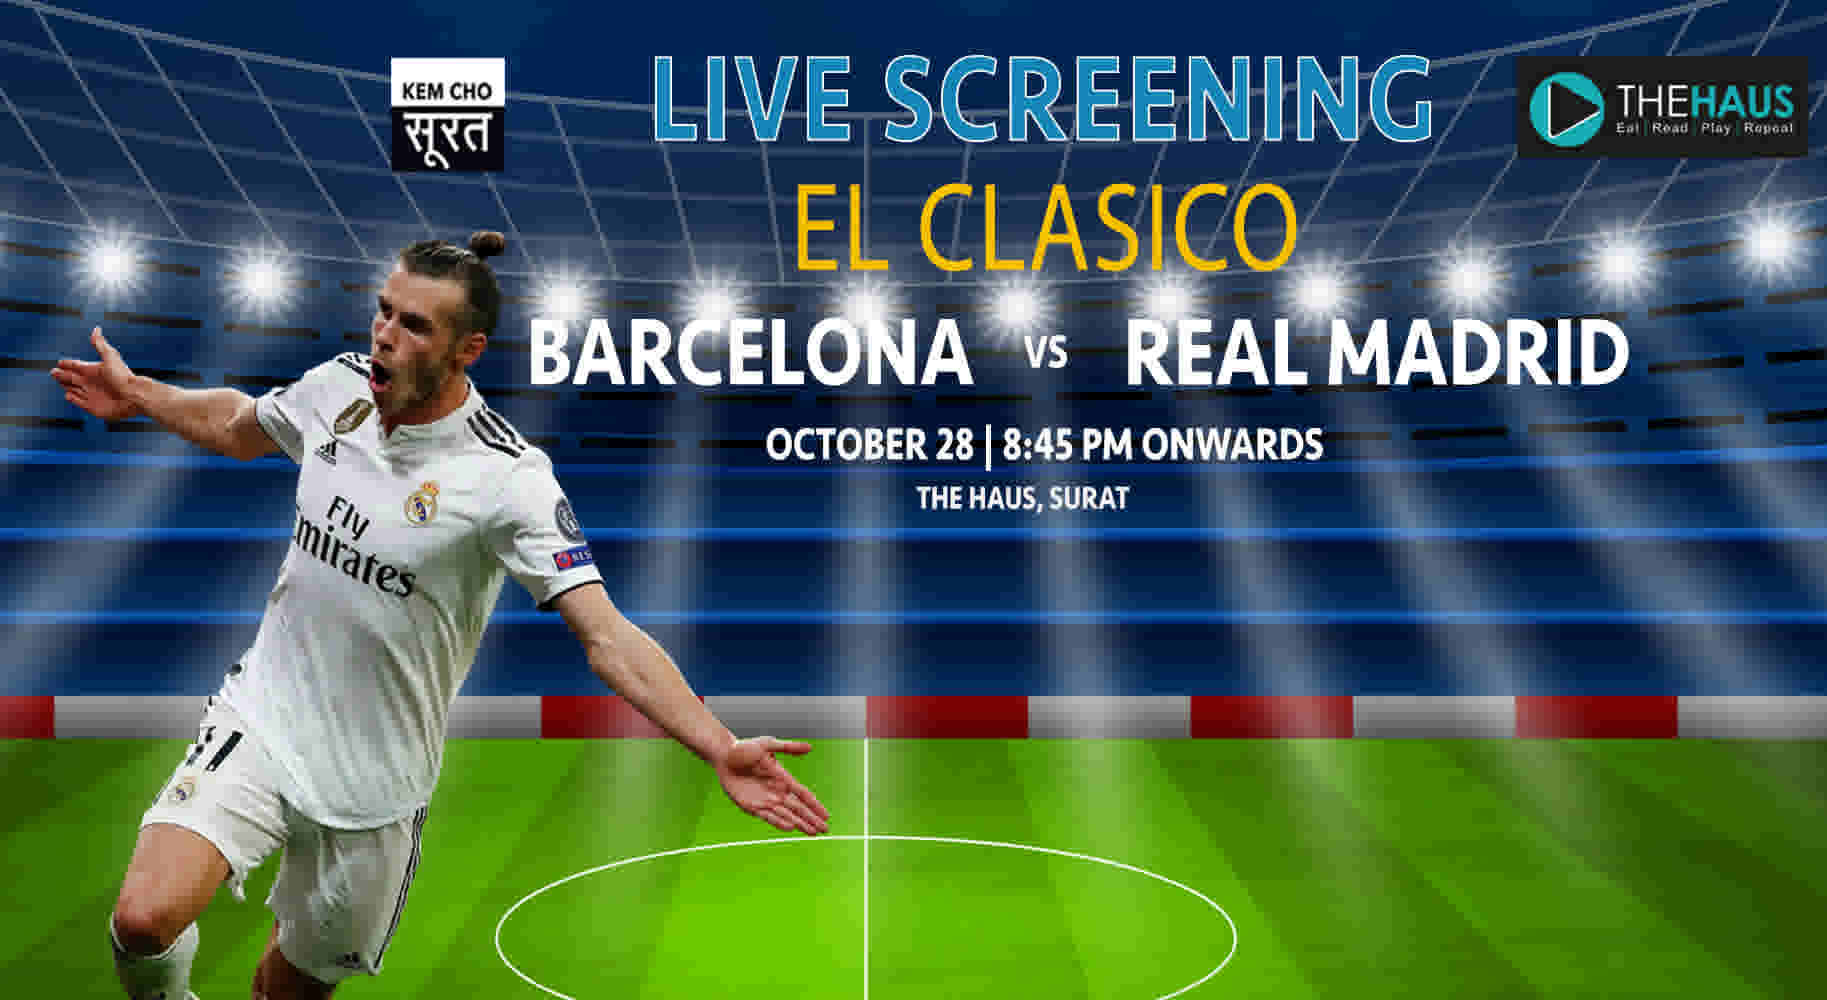 El Clasico Live Screening Barcelona vs Real Madrid at The Haus Surat